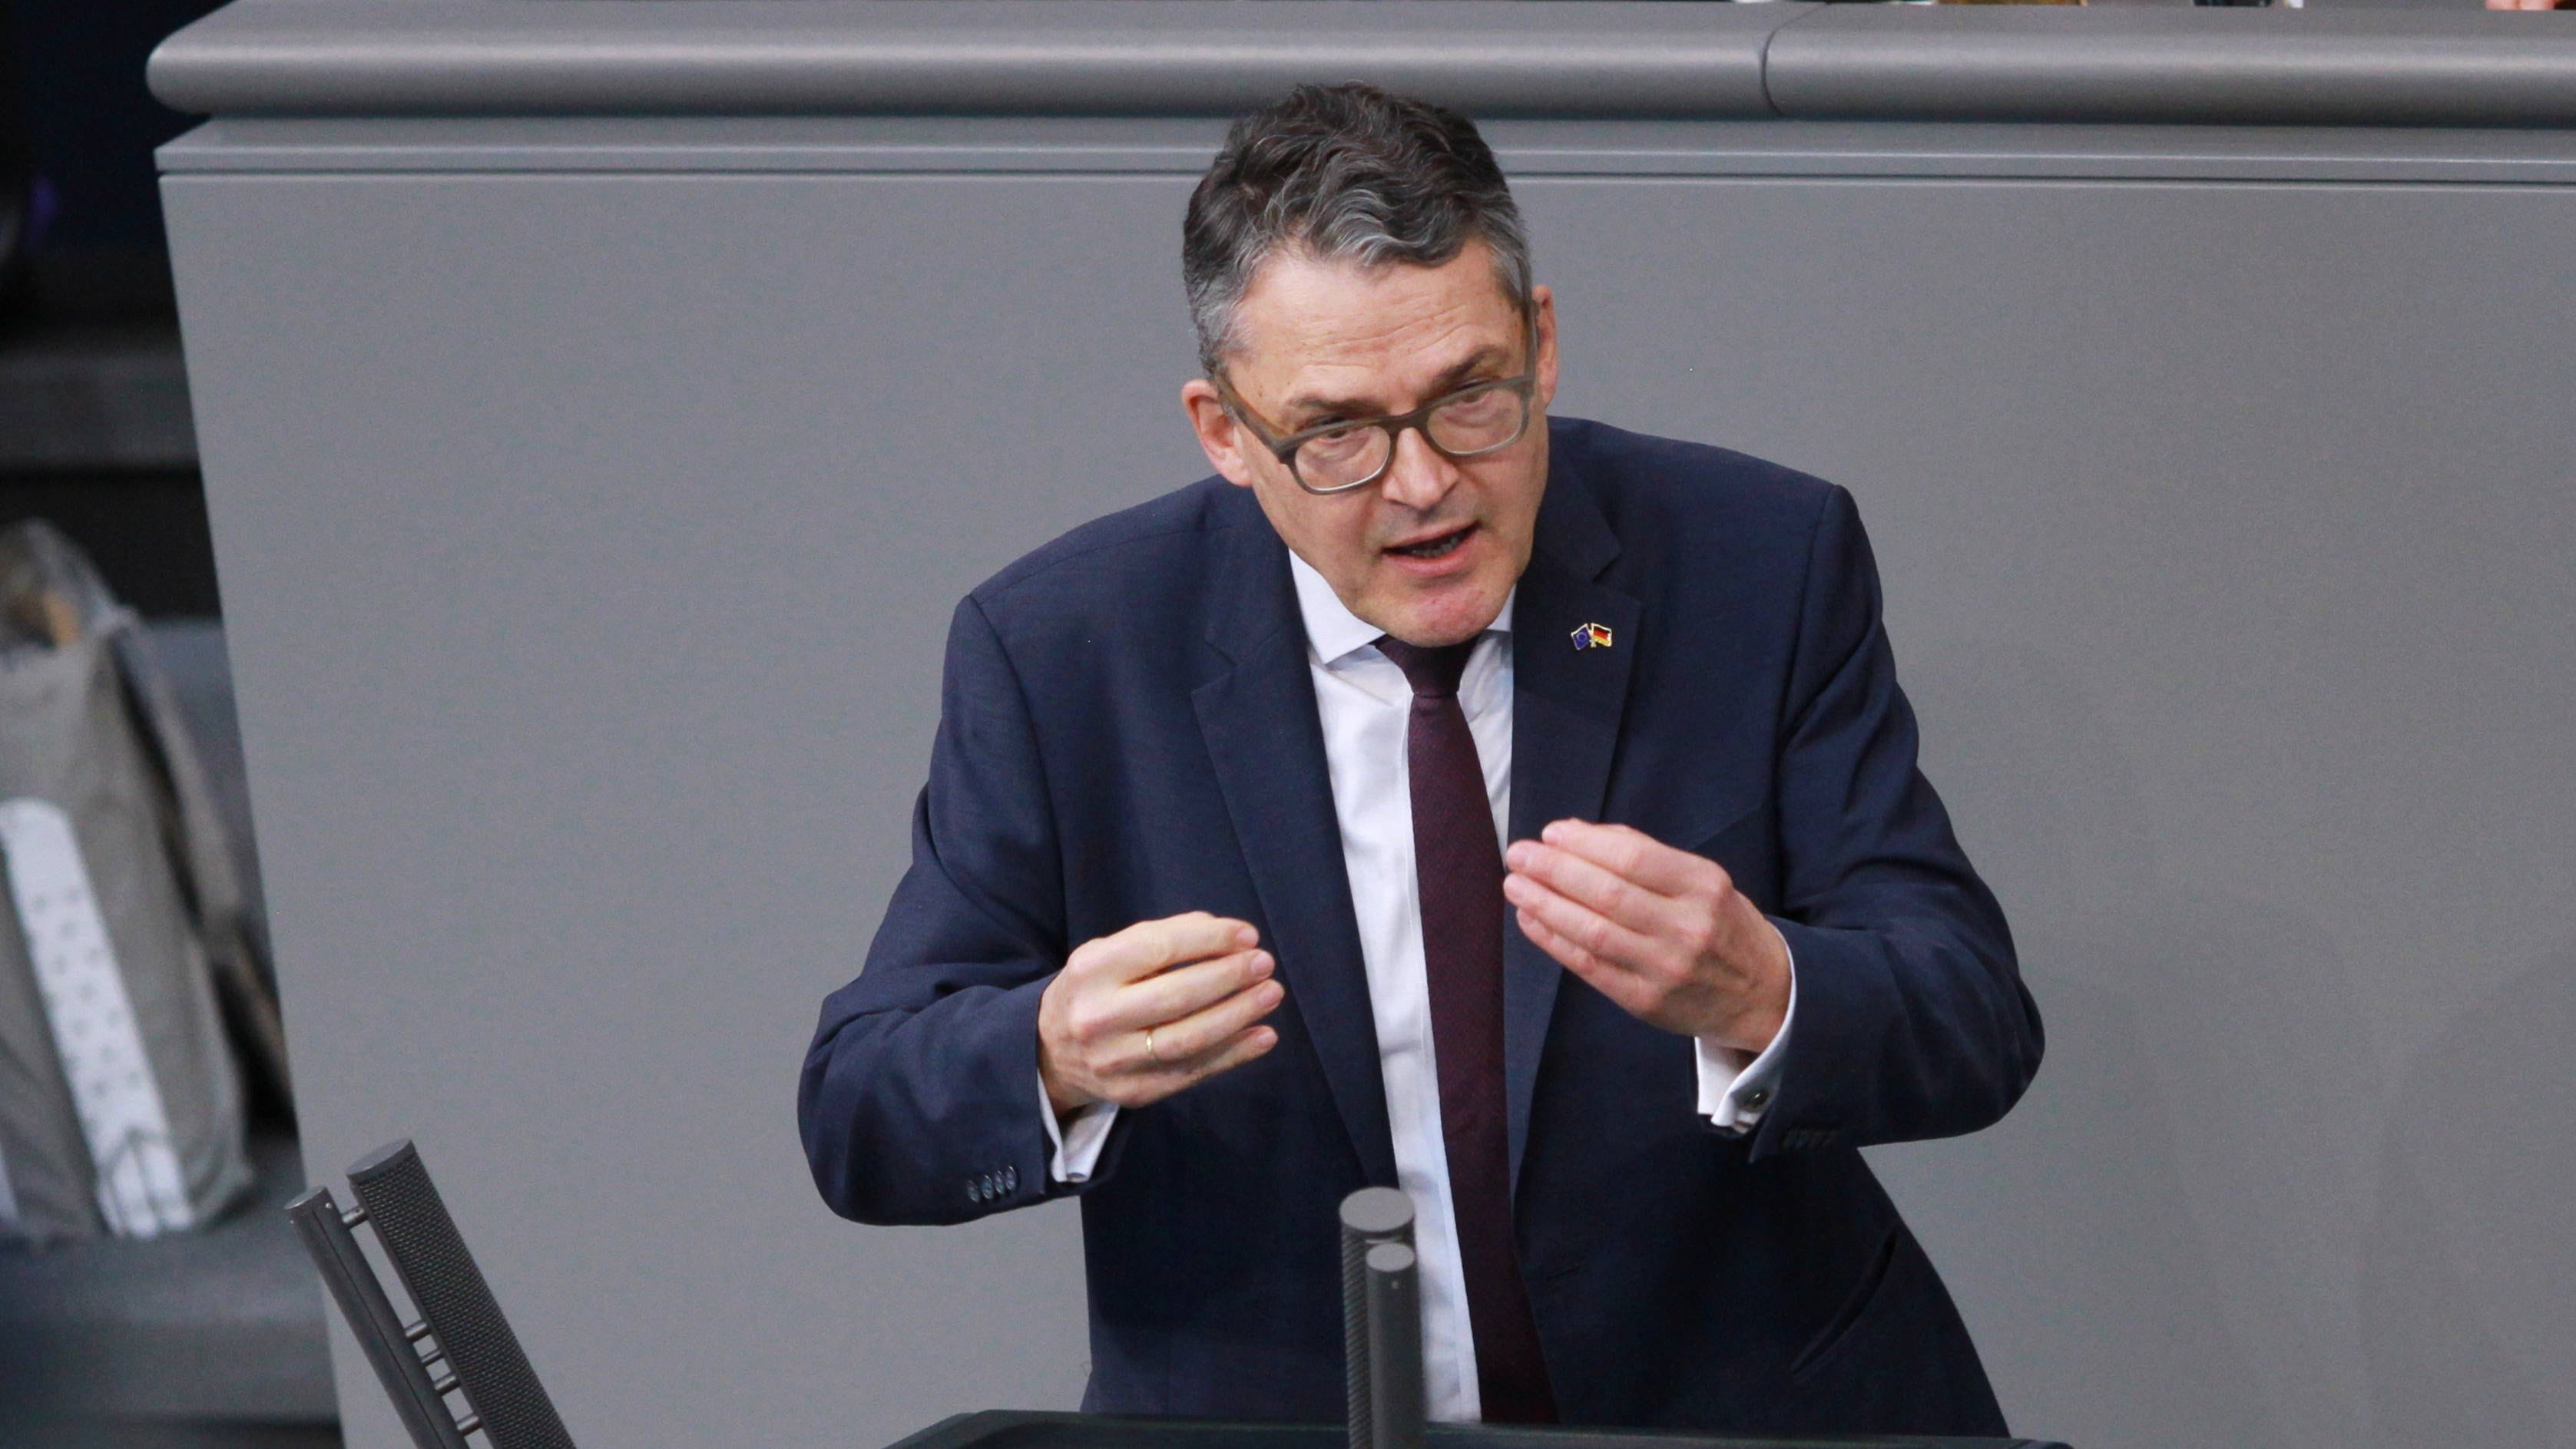 CDU-Politiker Roderich Kiesewetter an Wahlkampfstand in Aalen angegangen